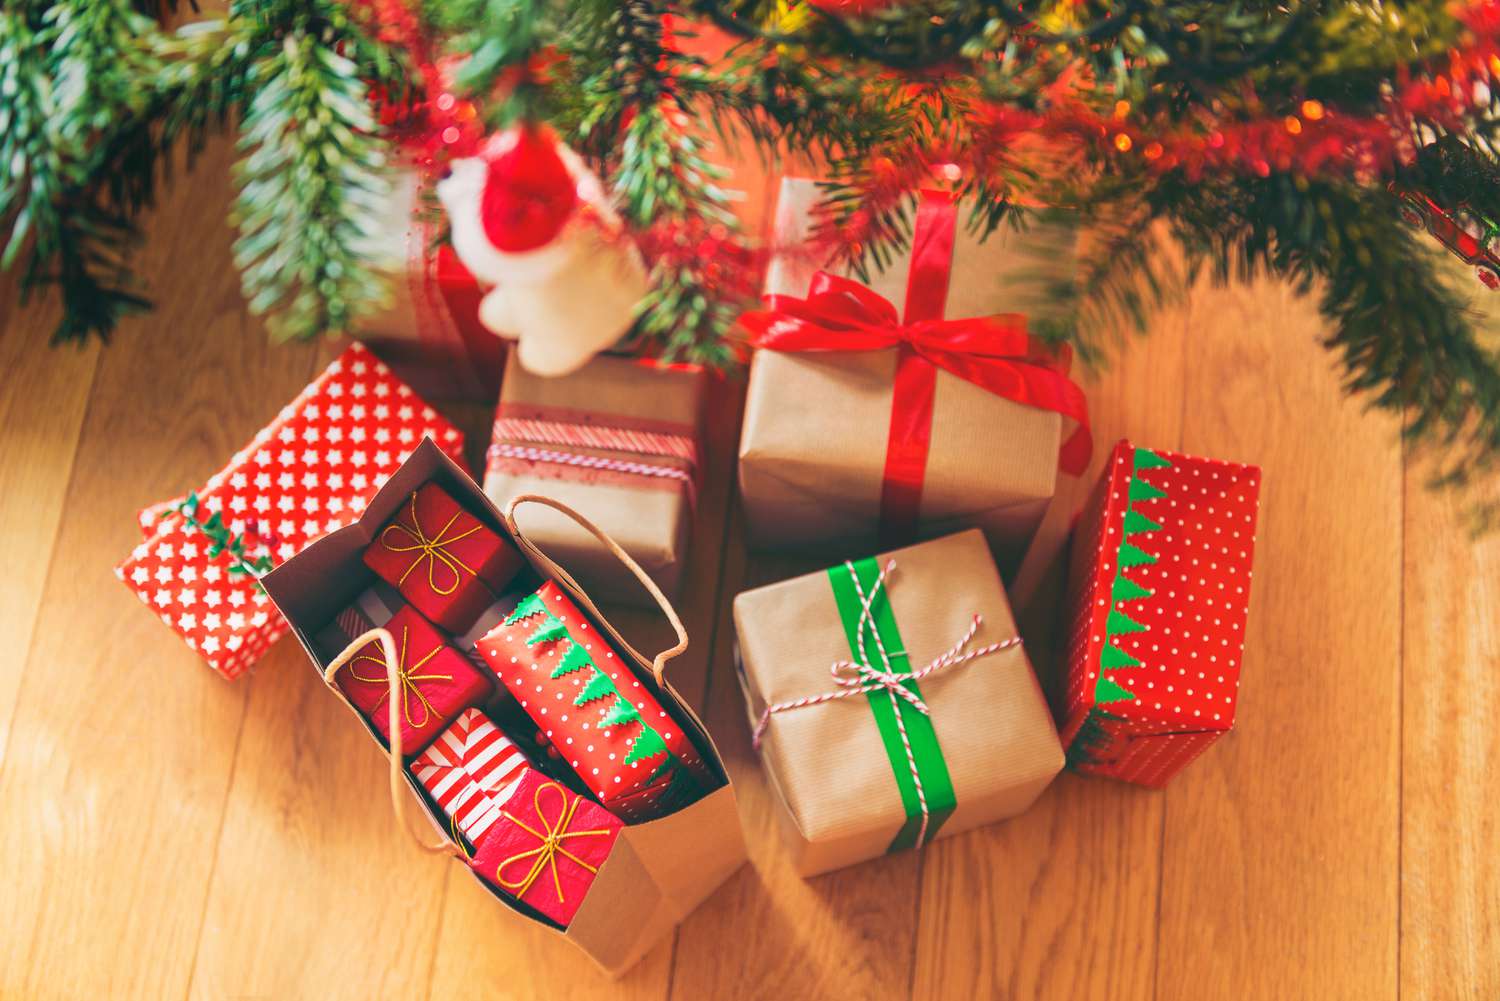 Christmas Presents under Christmas Tree